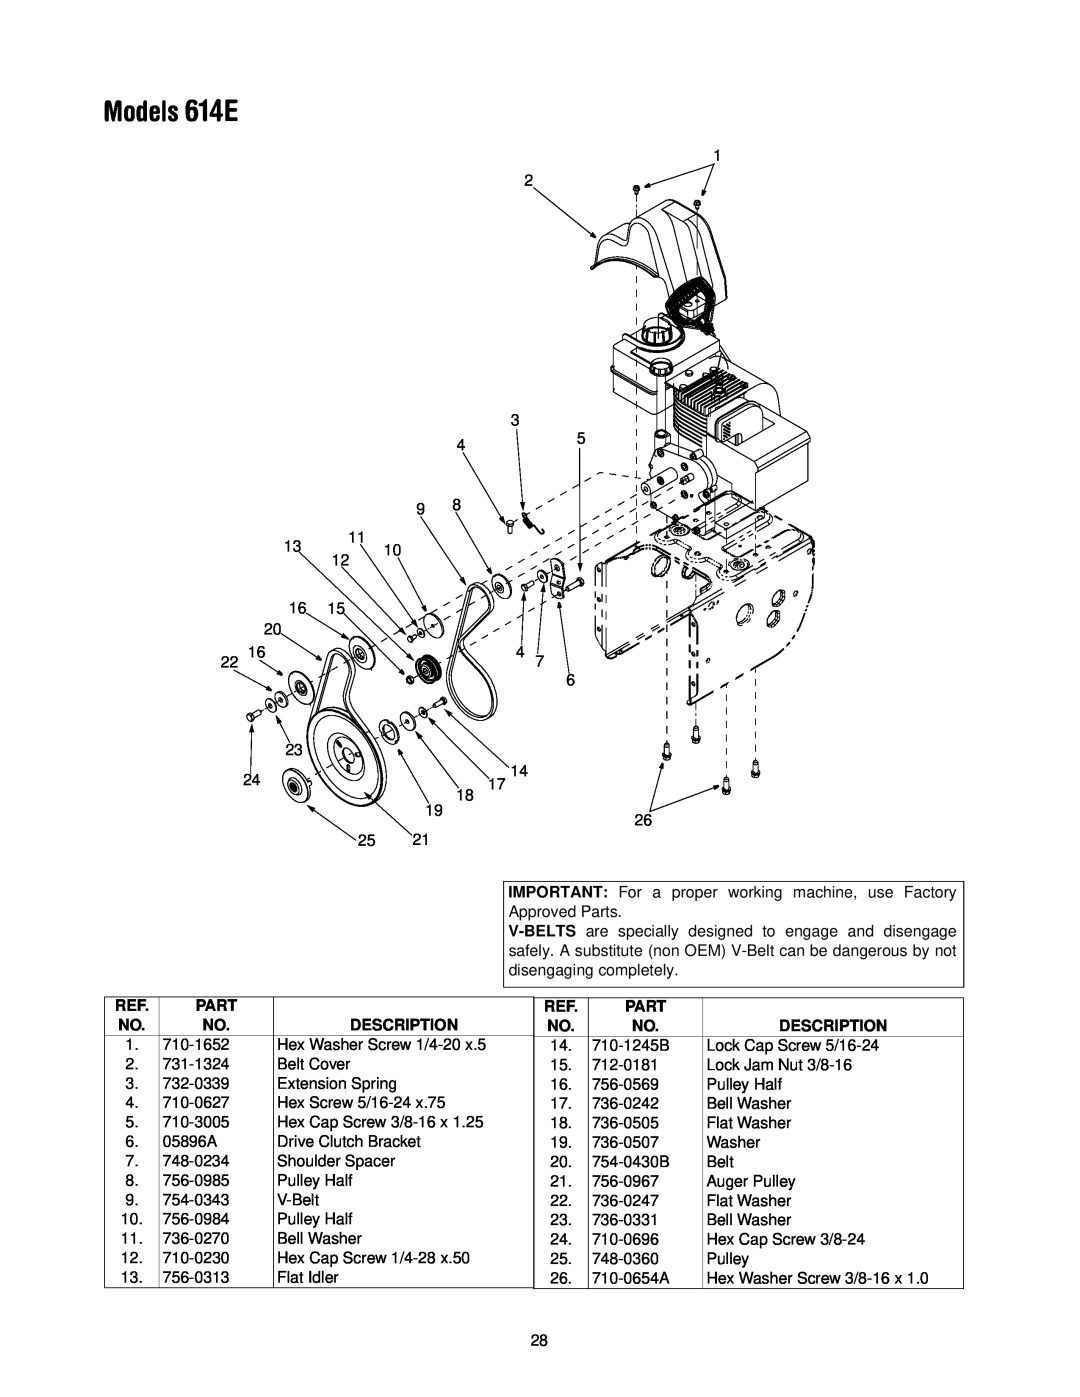 MTD manual Models 614E, Hex Washer Screw 1/4-20 